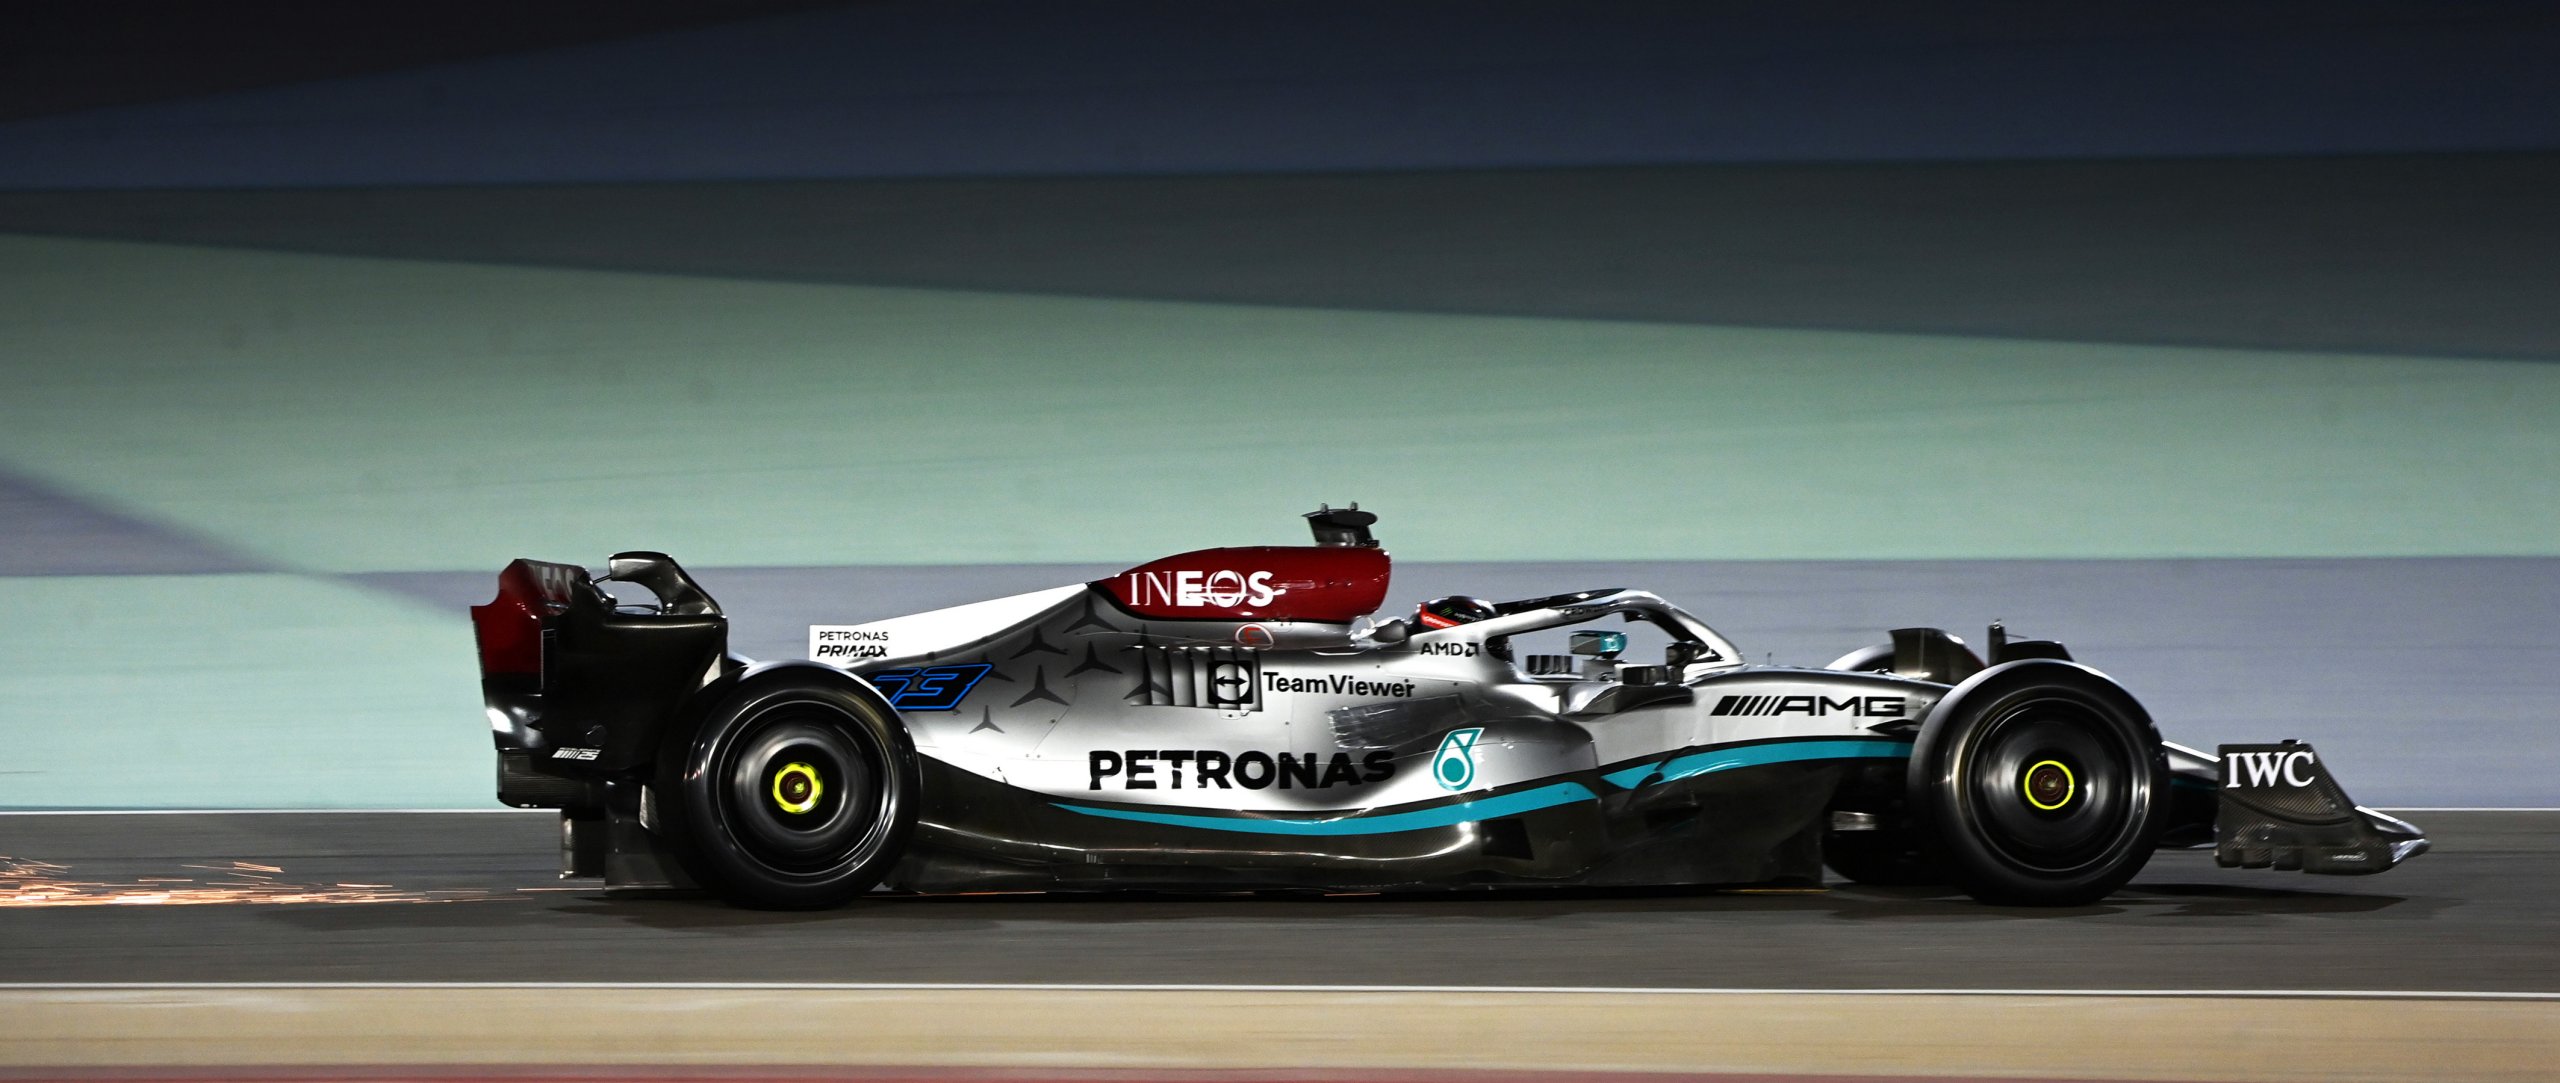 A Productive Test For The Mercedes AMG Petronas F1 Team Ahead Of The 2022 F1 Season